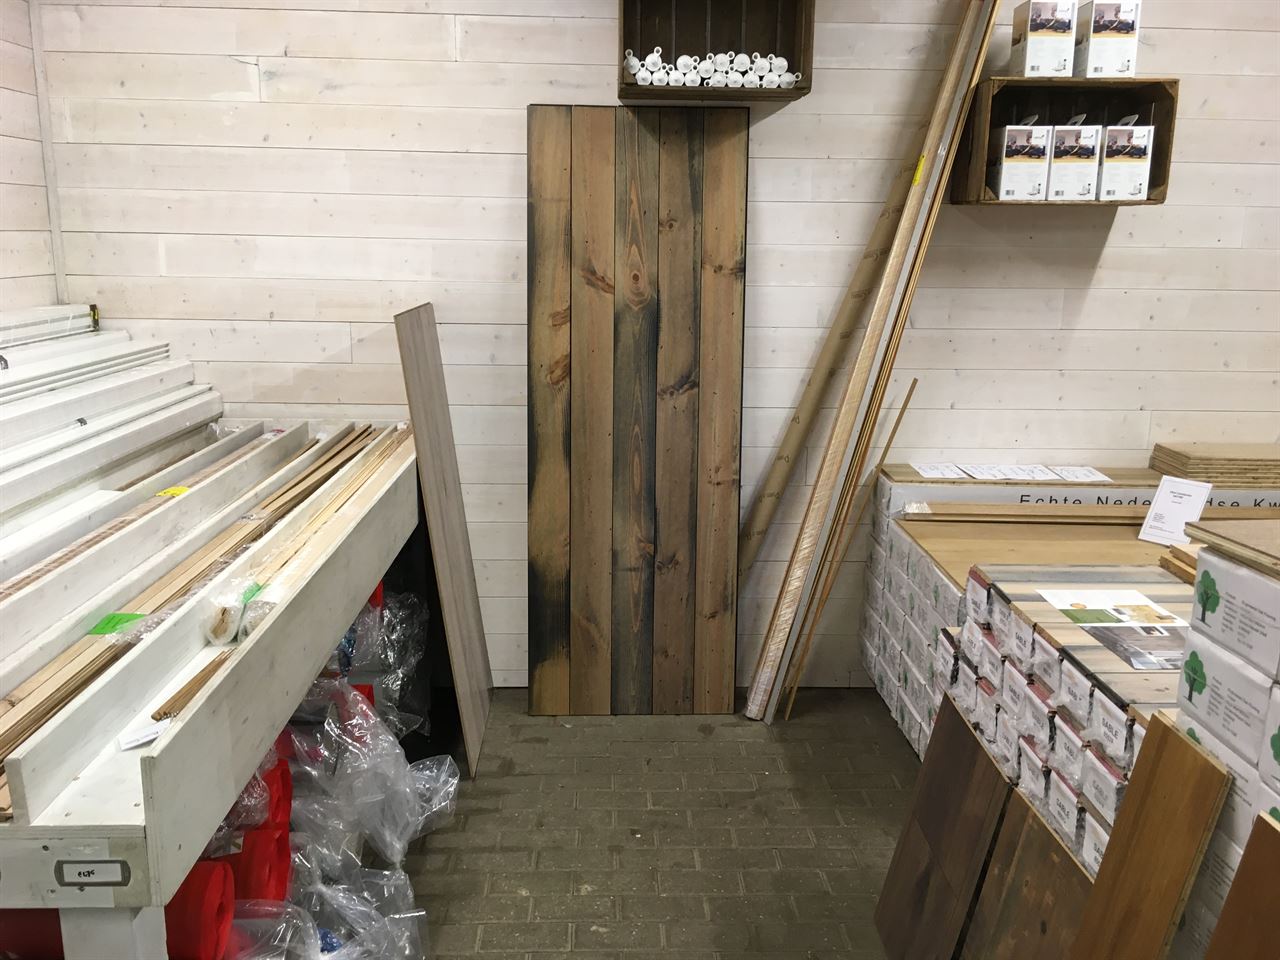 Grenen vloer / wand planken 18X140 mm Soiree